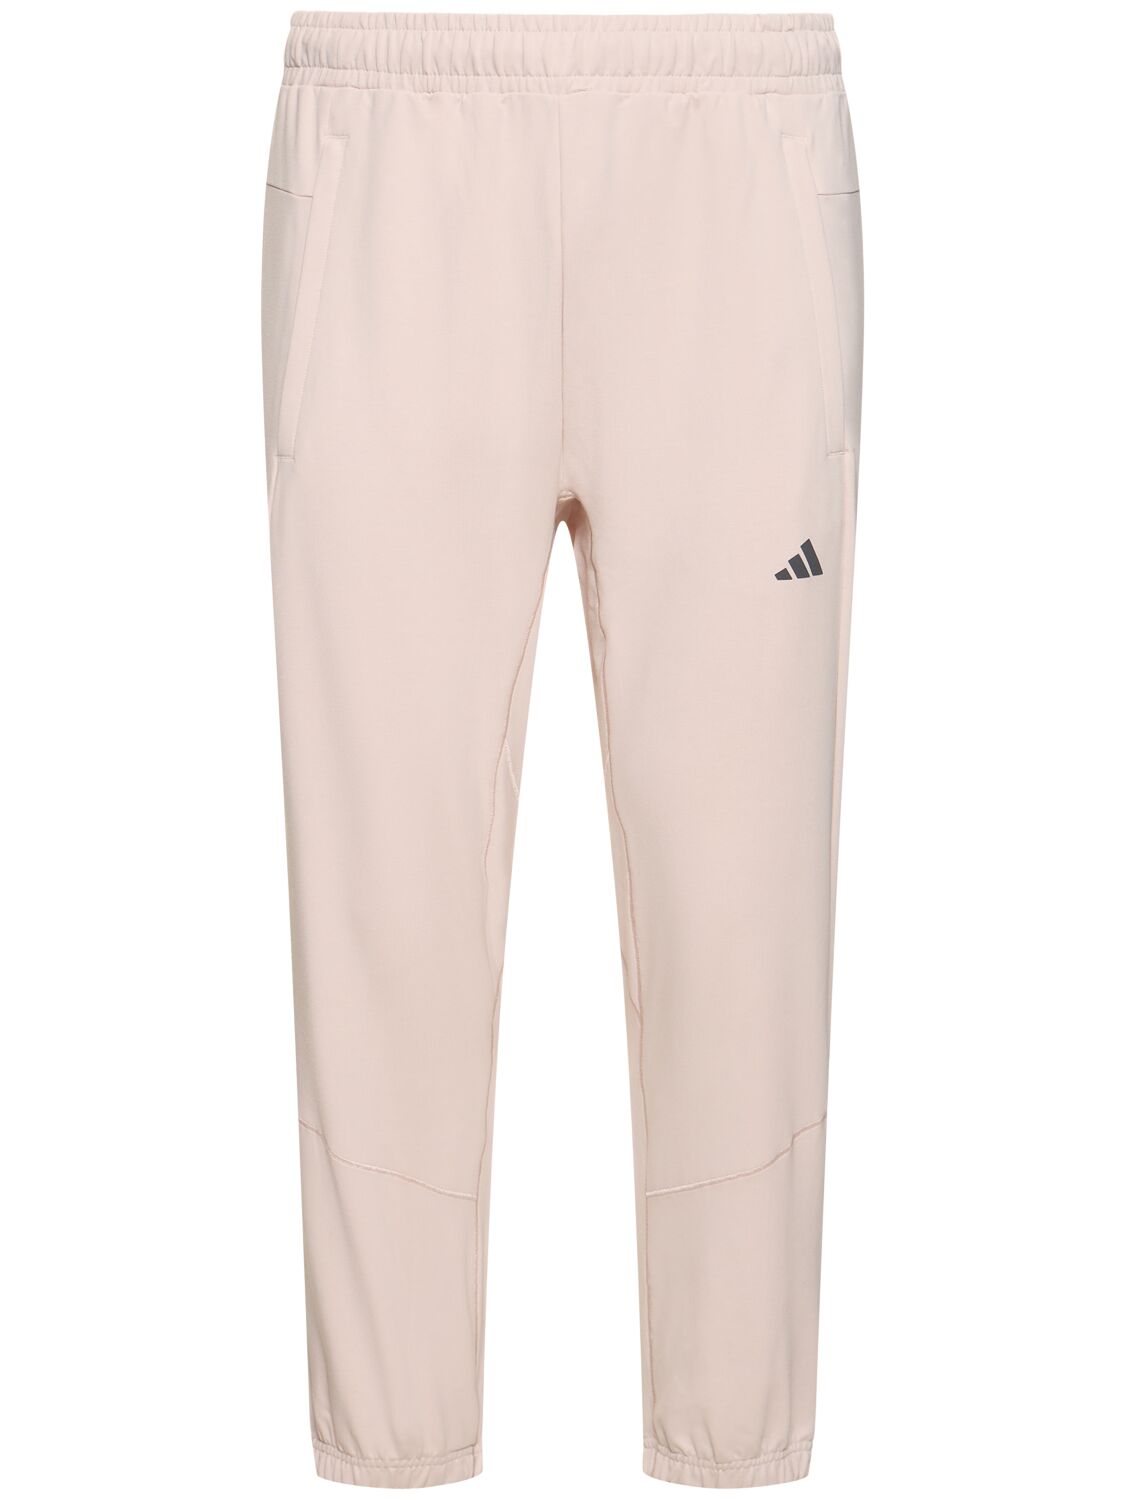 Adidas Originals Yoga Pants In Grey